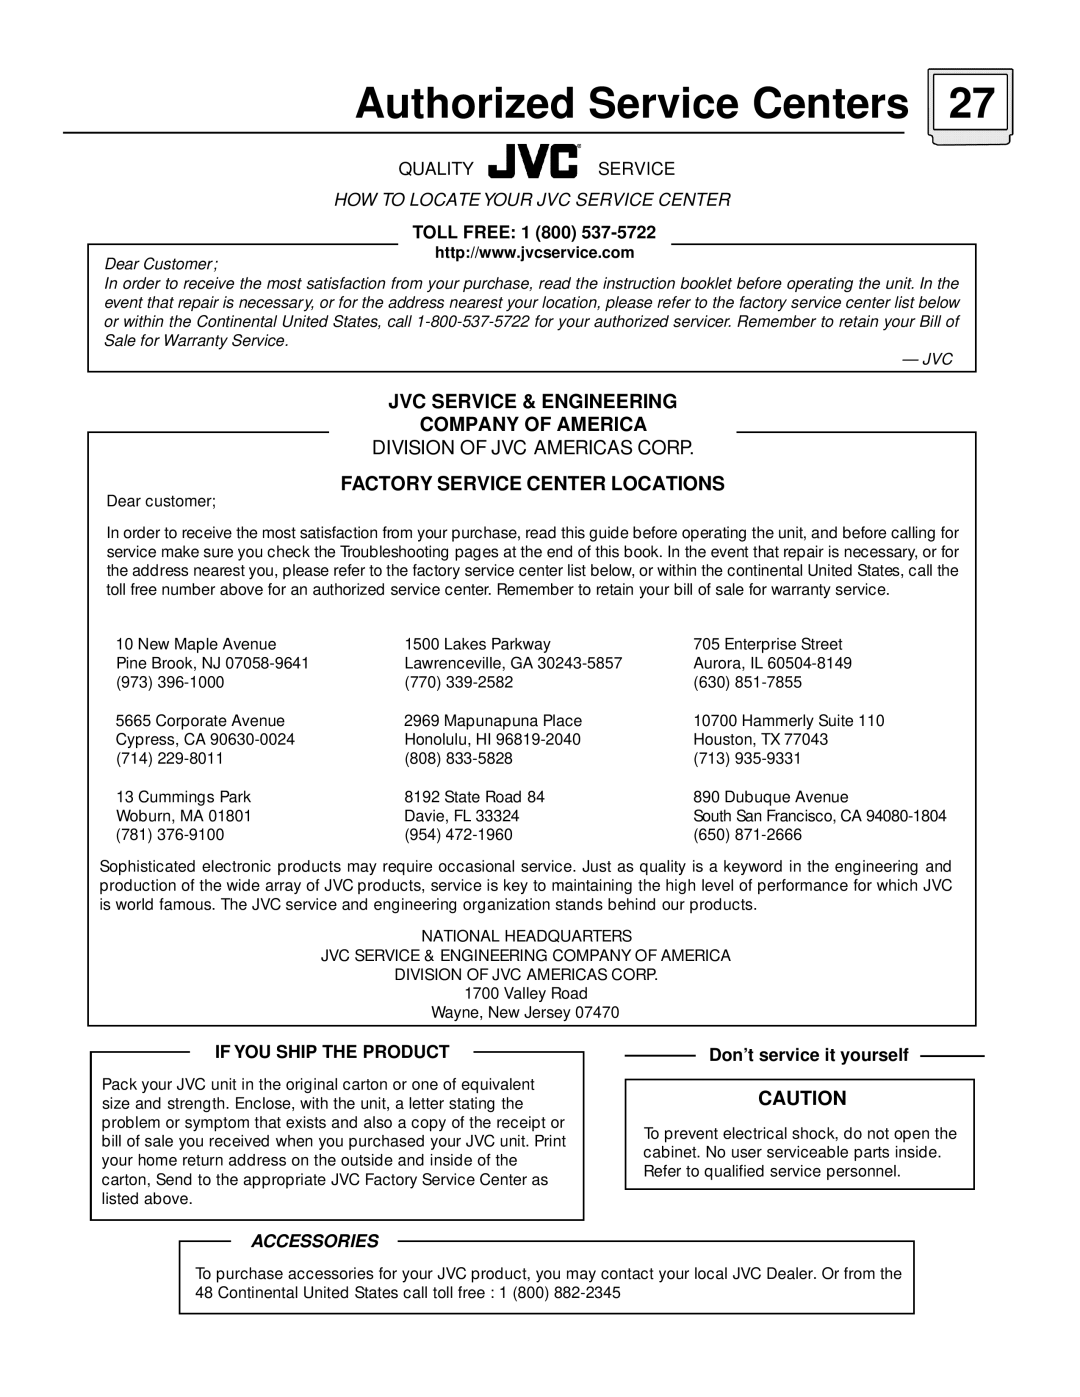 JVC C-13110, AV-27115 manual Authorized Service Centers, Toll Free 1 800 